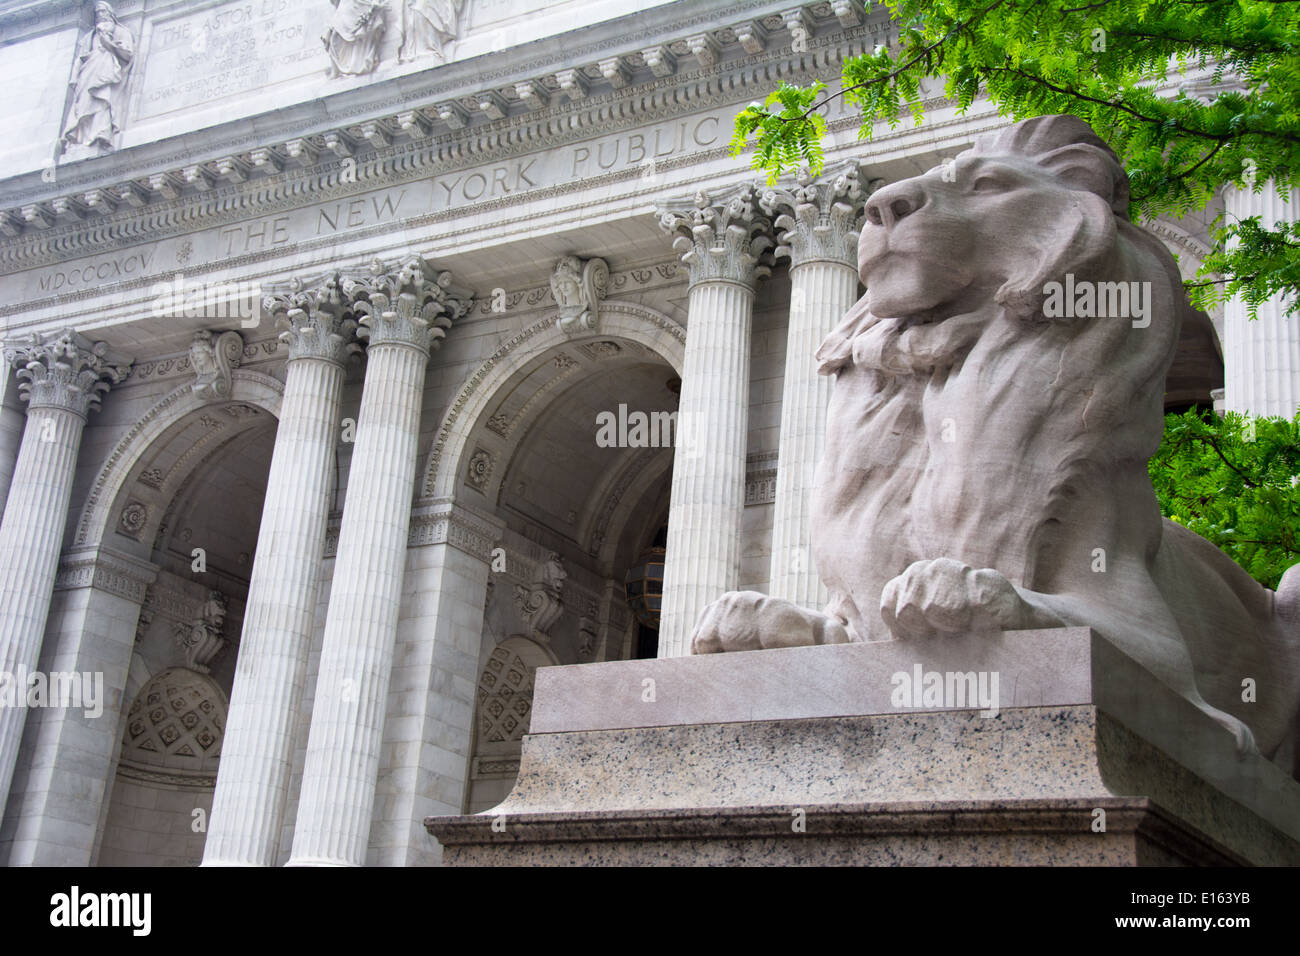 The New York Public Library, Manhattan, New York City. Stock Photo